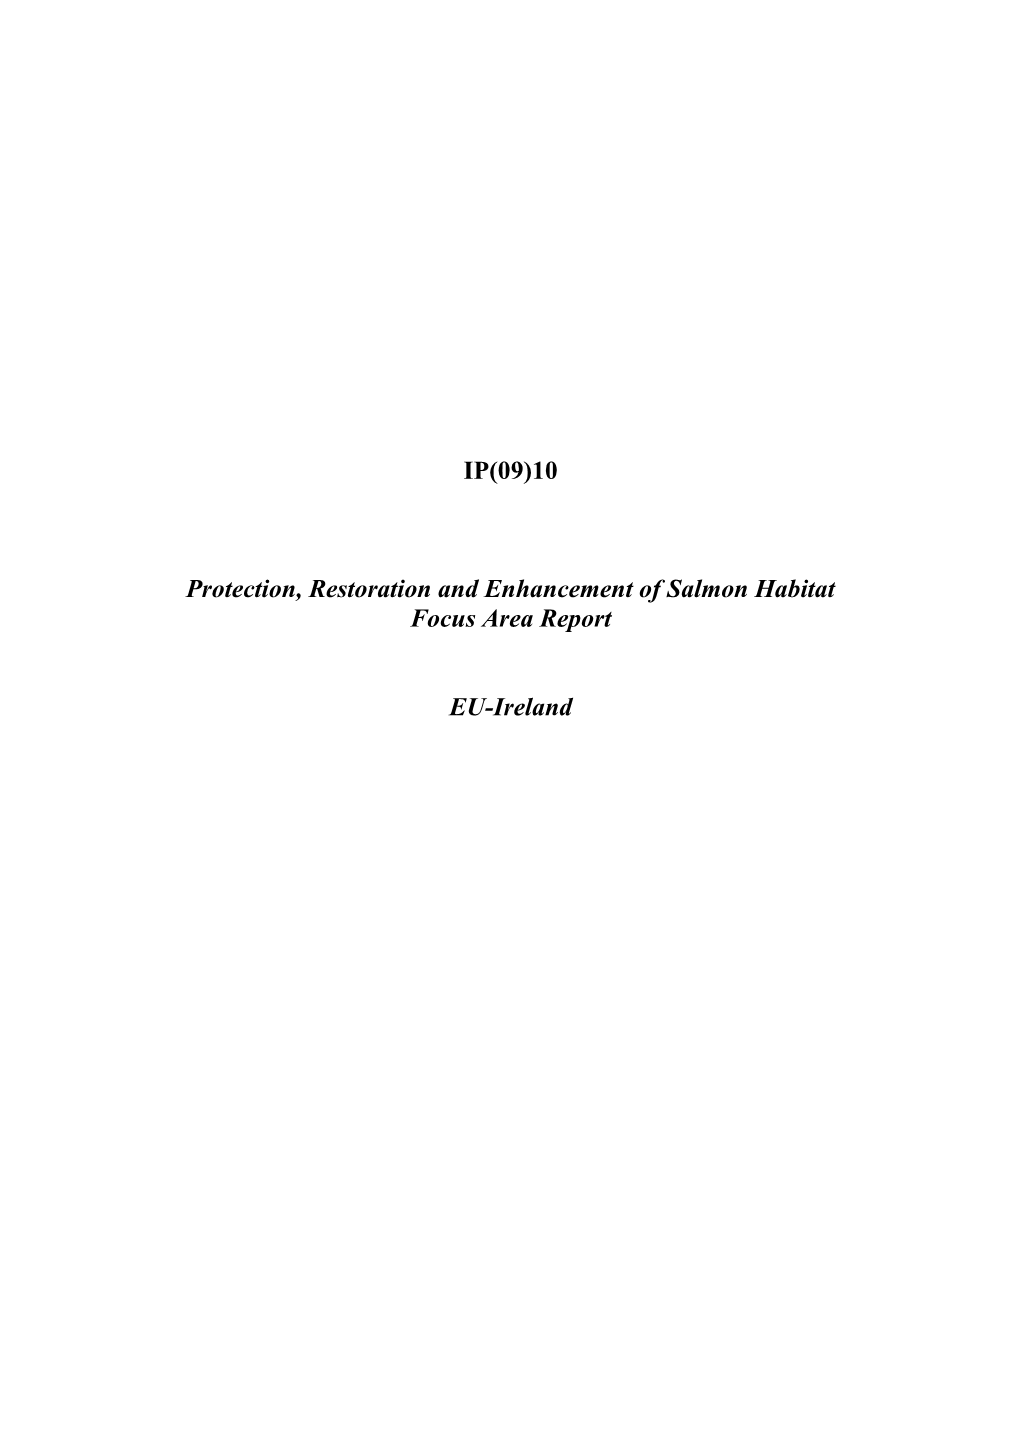 IP(09)10 Protection, Restoration and Enhancement of Salmon Habitat